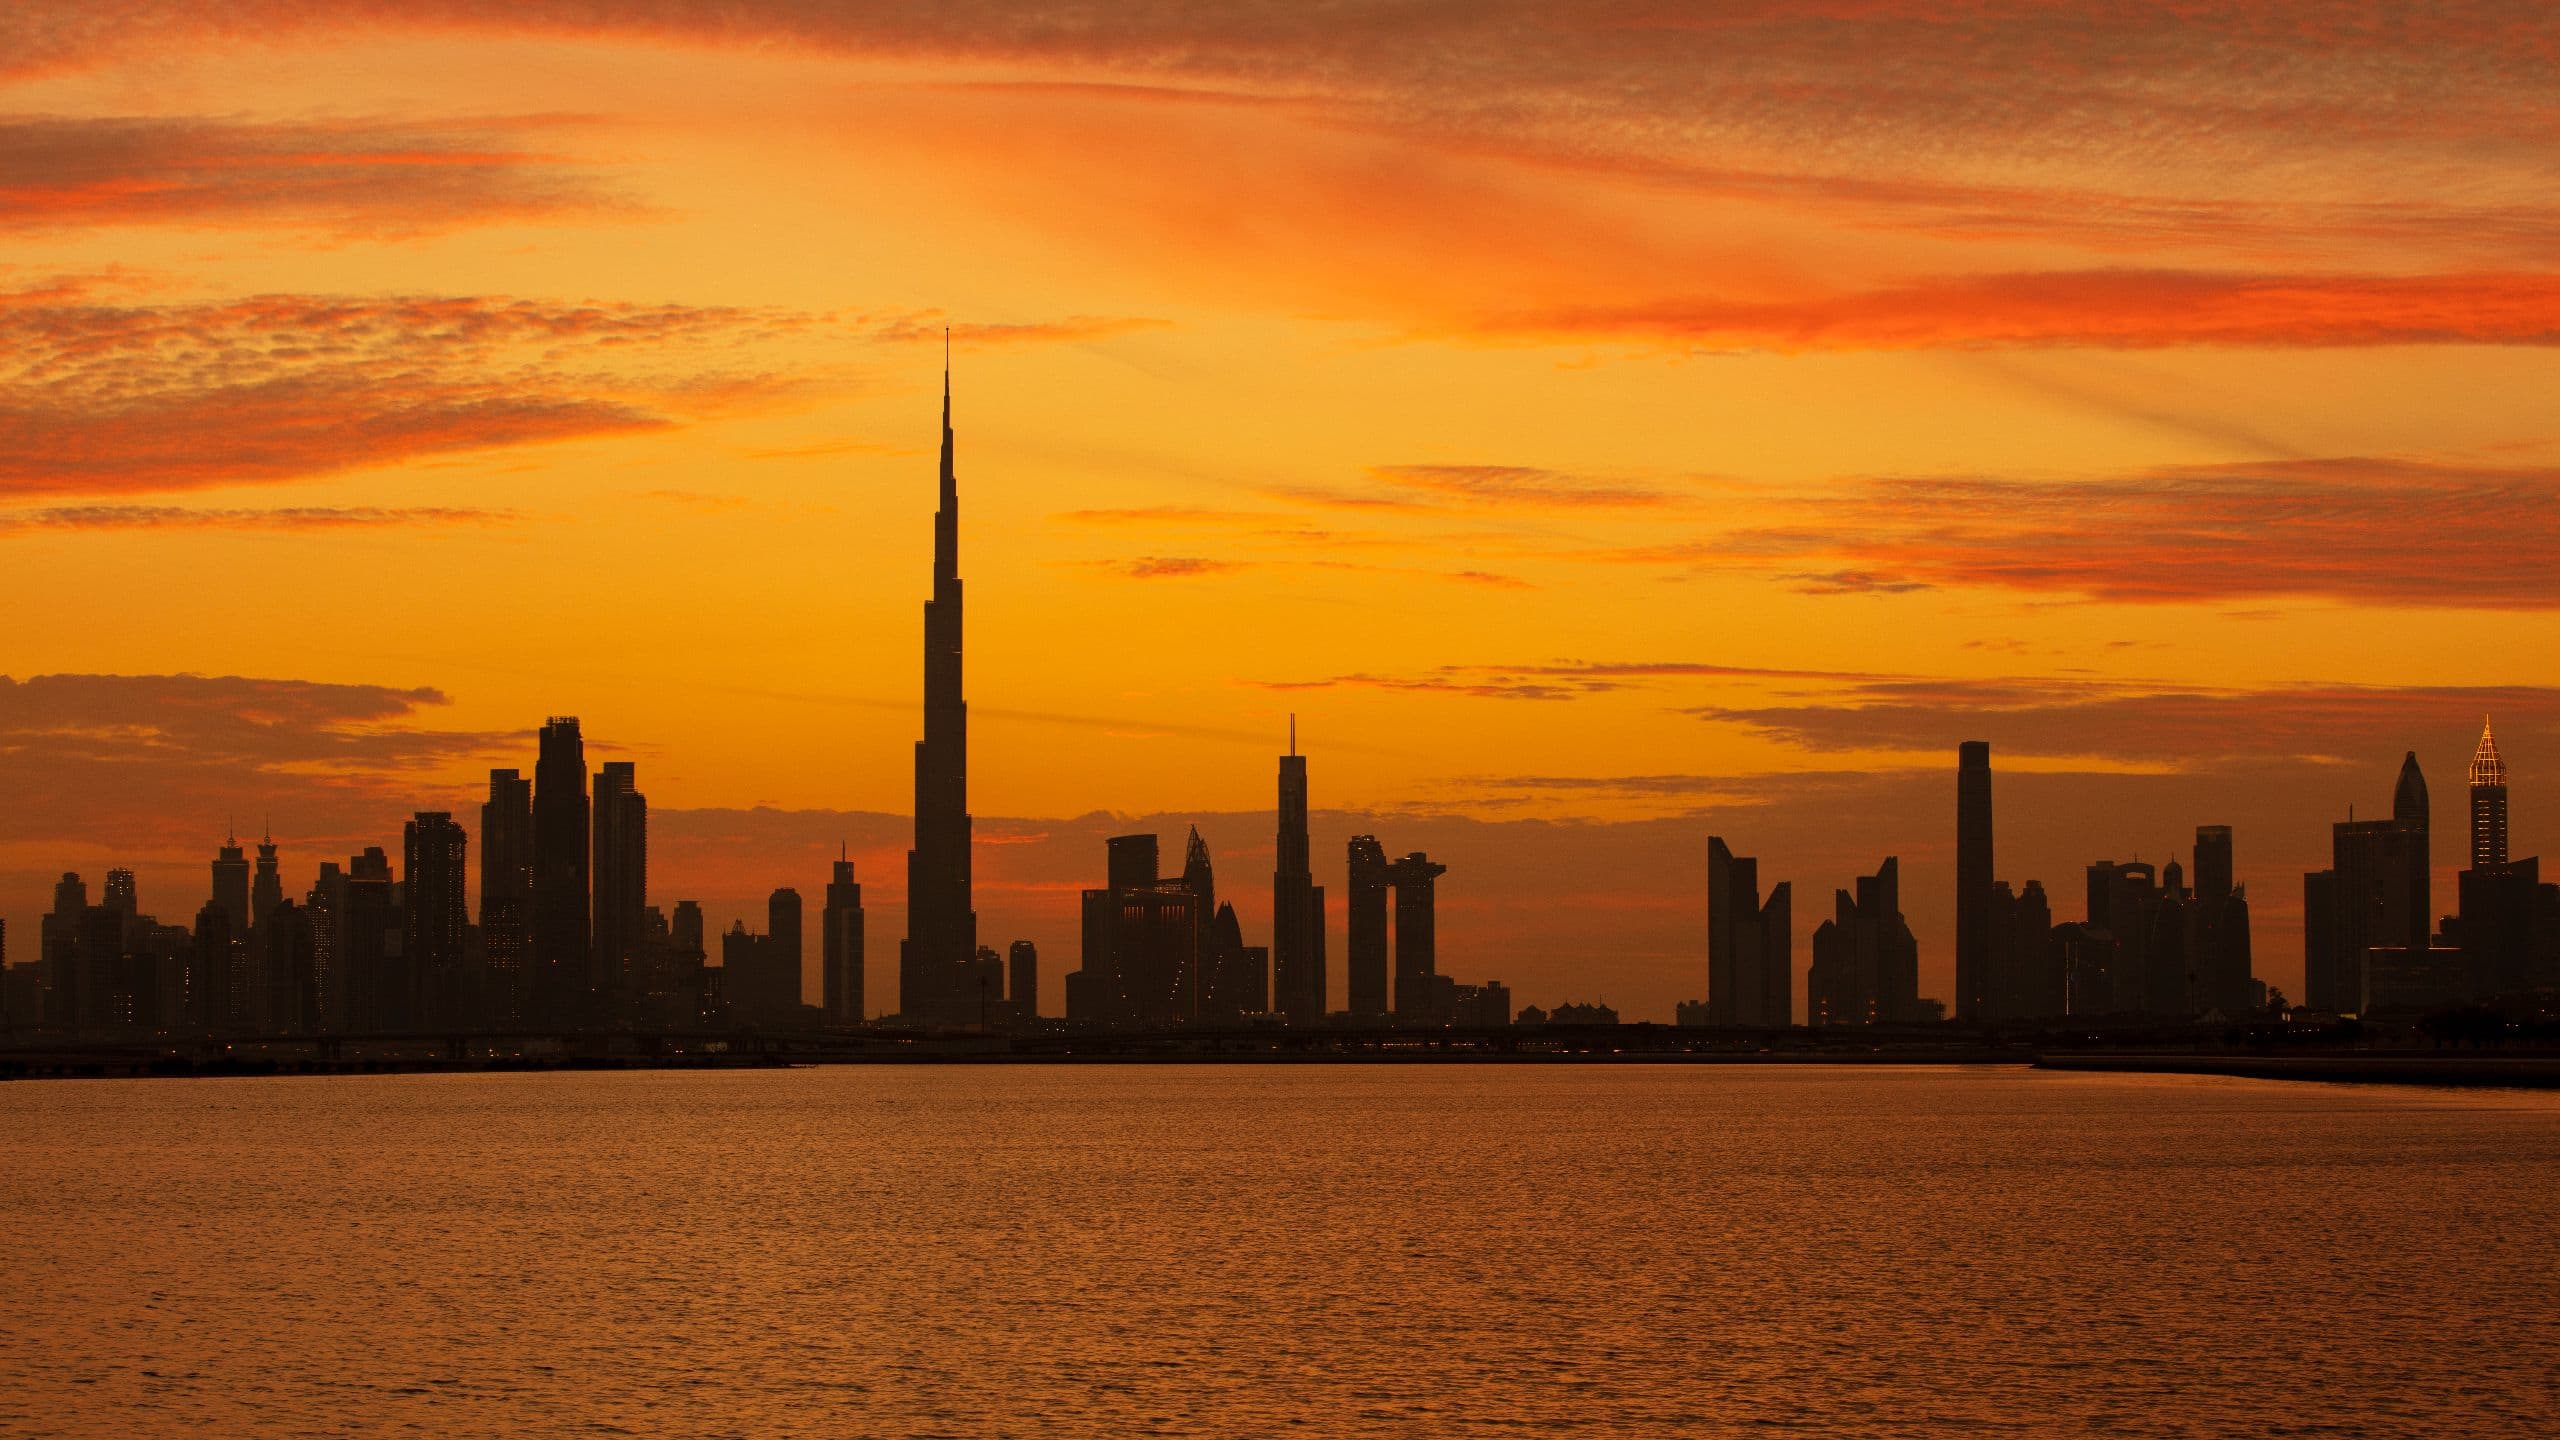 Hyatt Place Dubai Jumeirah Sunset Skyline